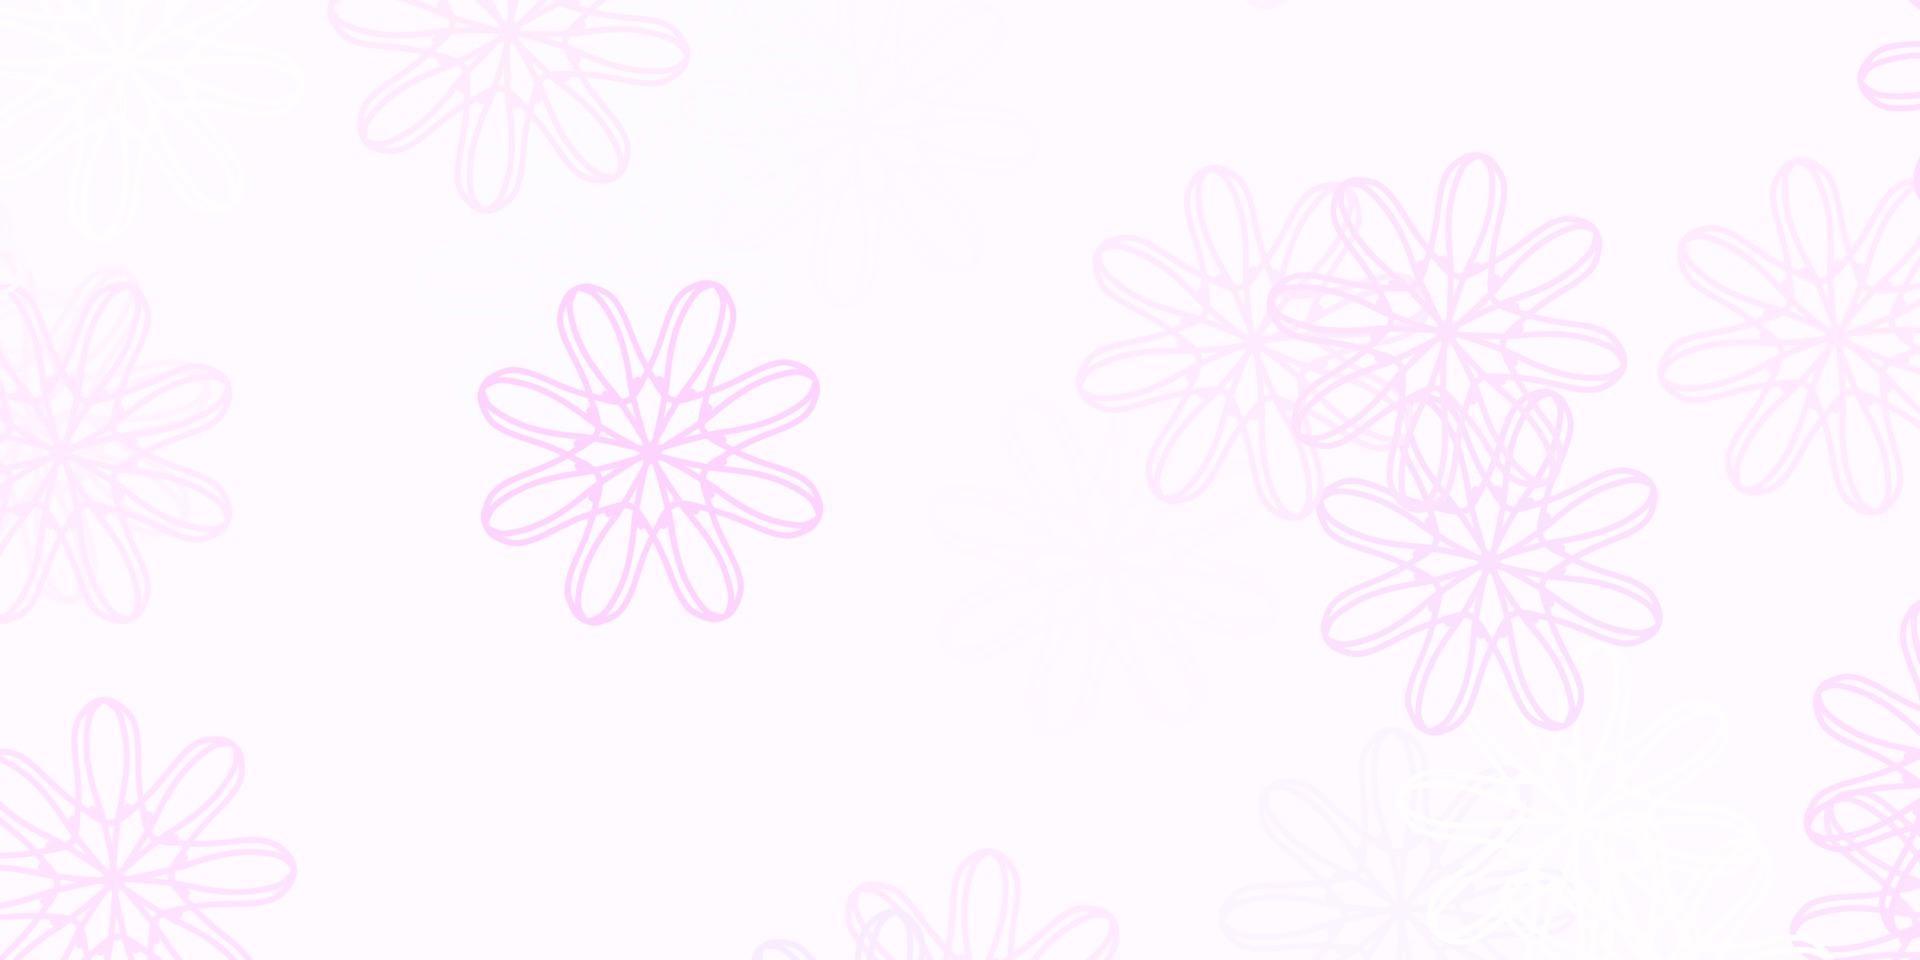 ljuslila vektor doodle bakgrund med blommor.